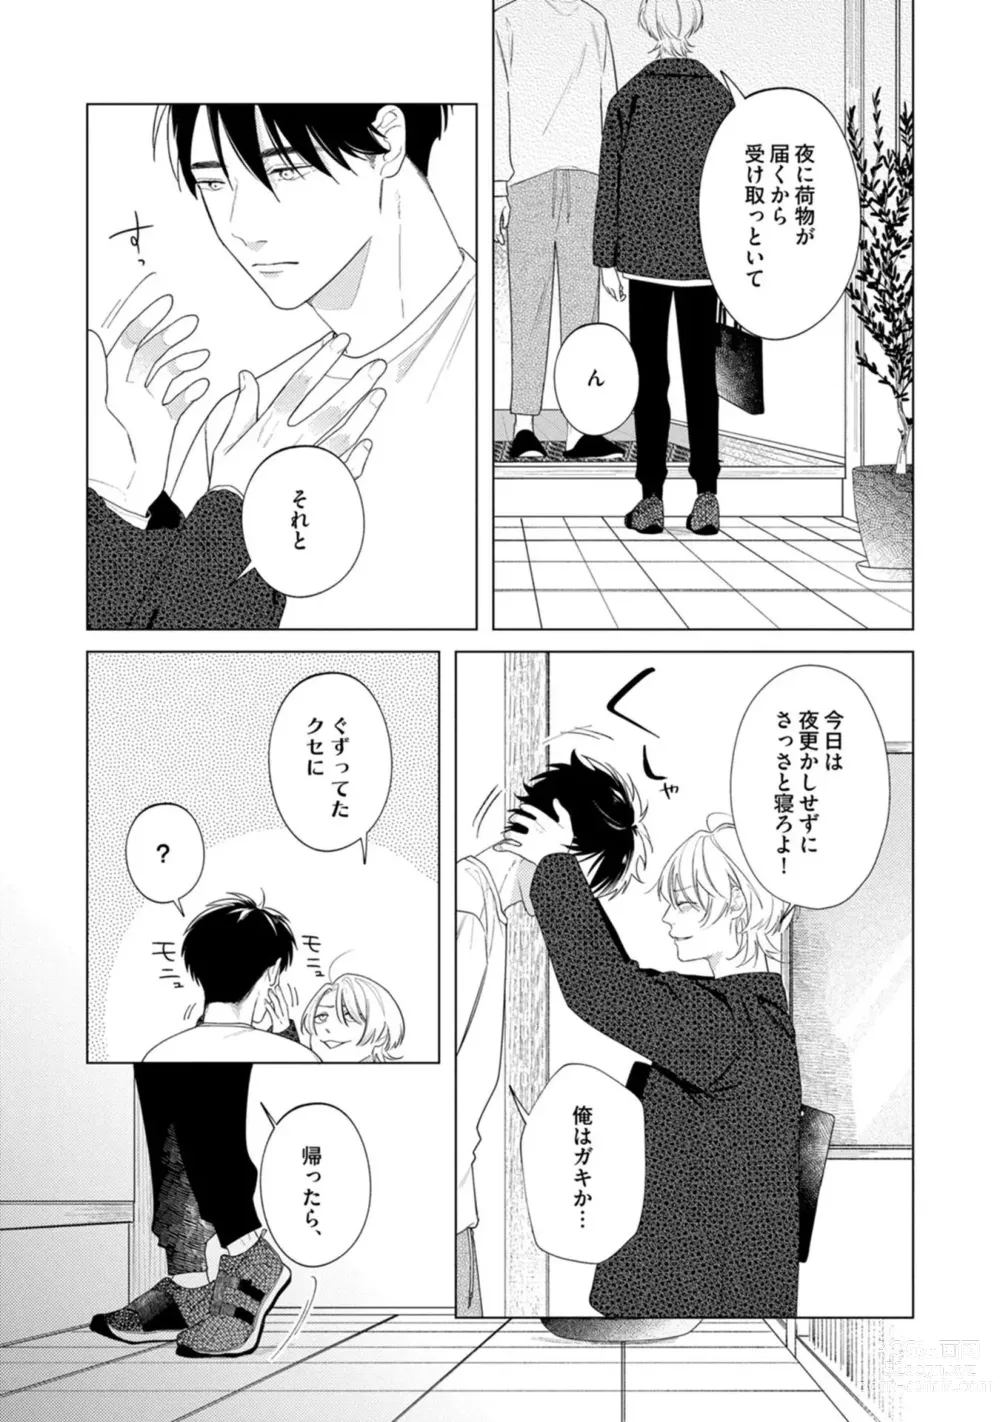 Page 17 of manga Yoru mo, Asa mo